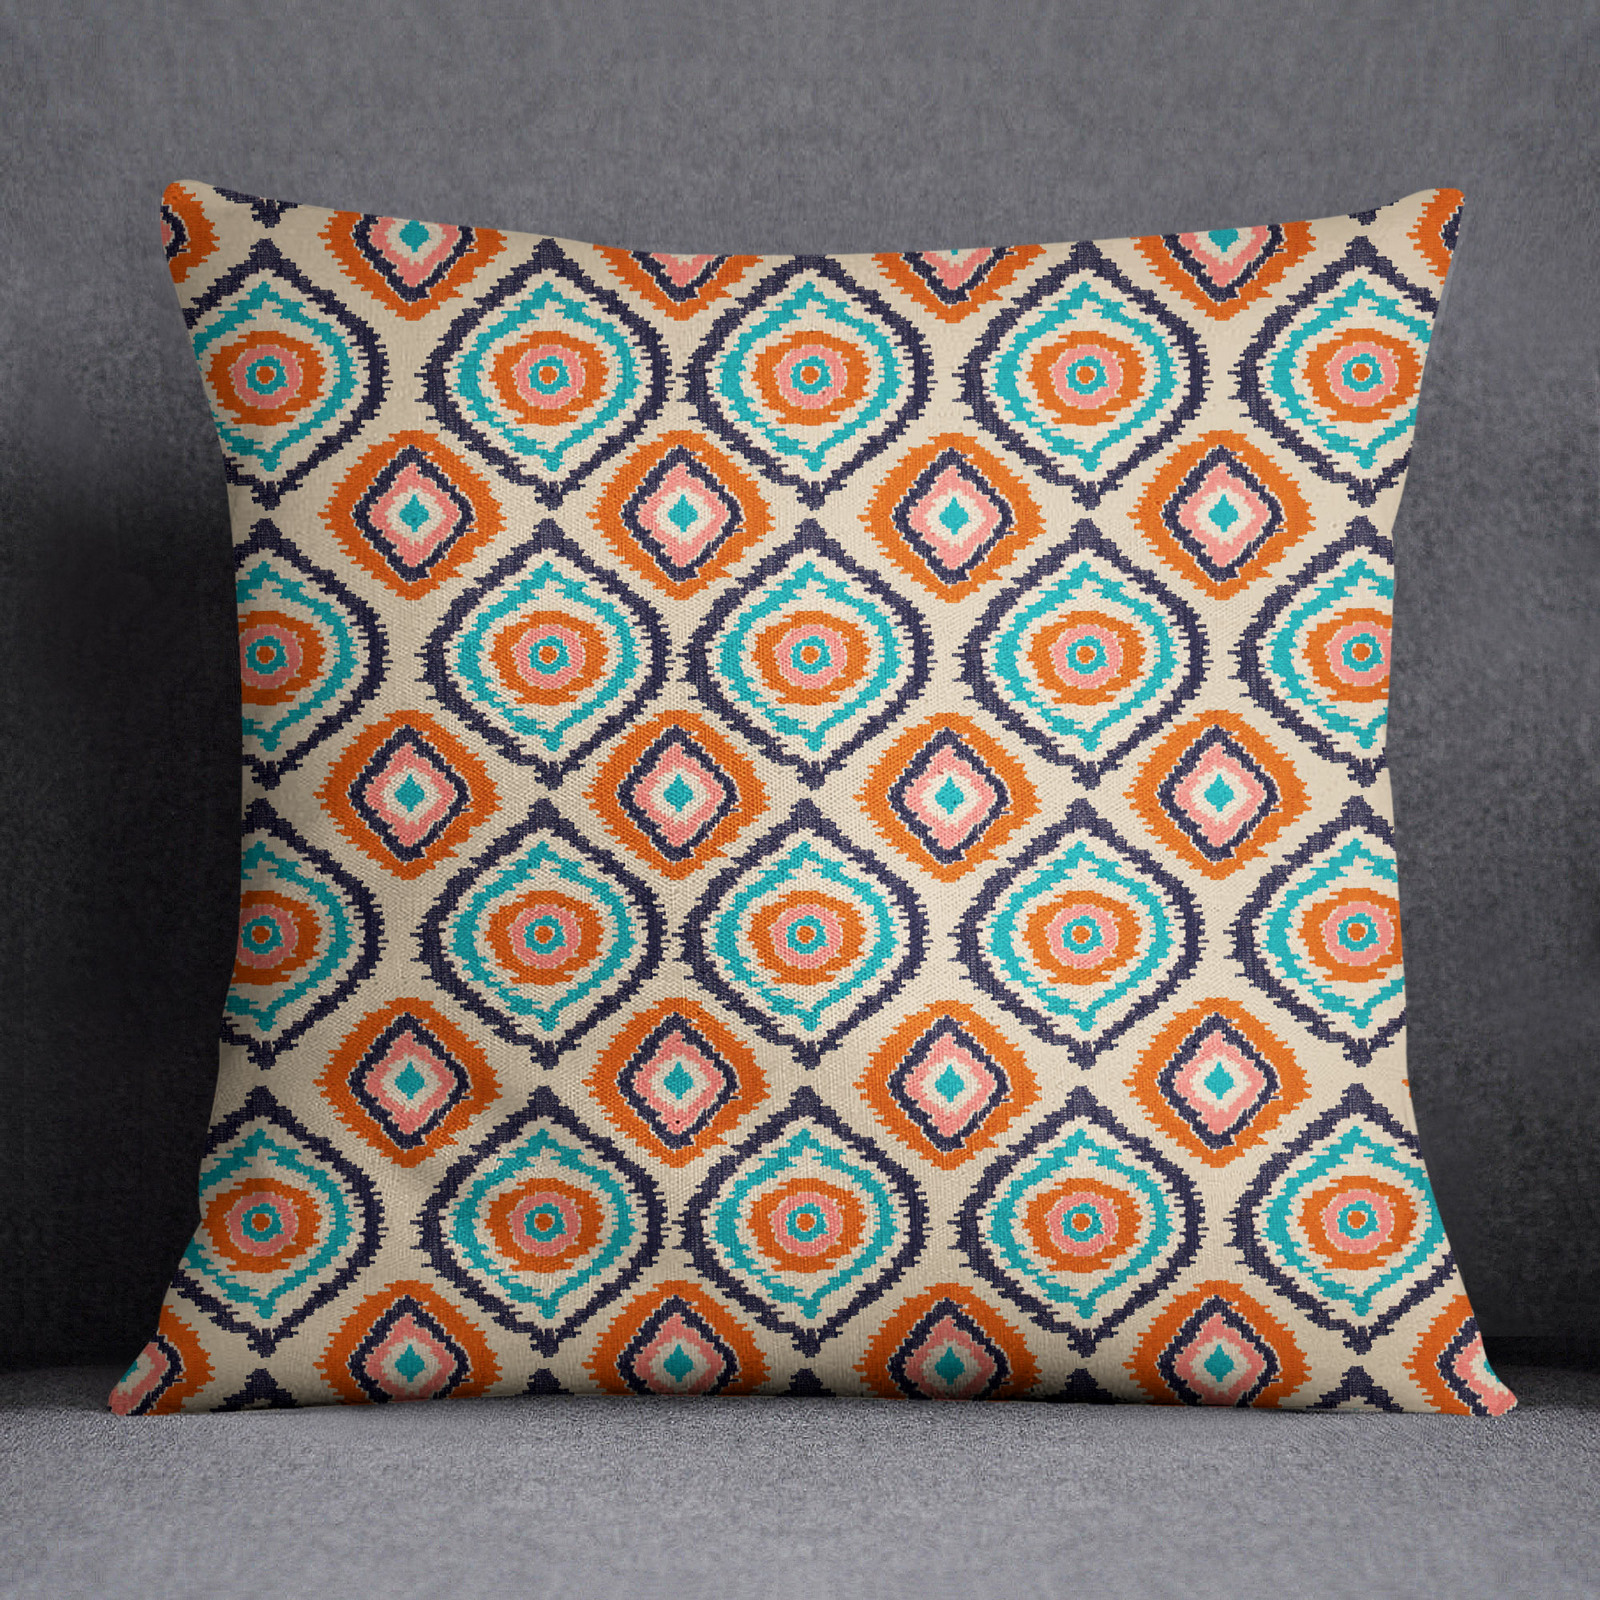 S4Sassy Home Decor Ikat Printed Orange Sofa Cushion Cover Throw Pillow Case